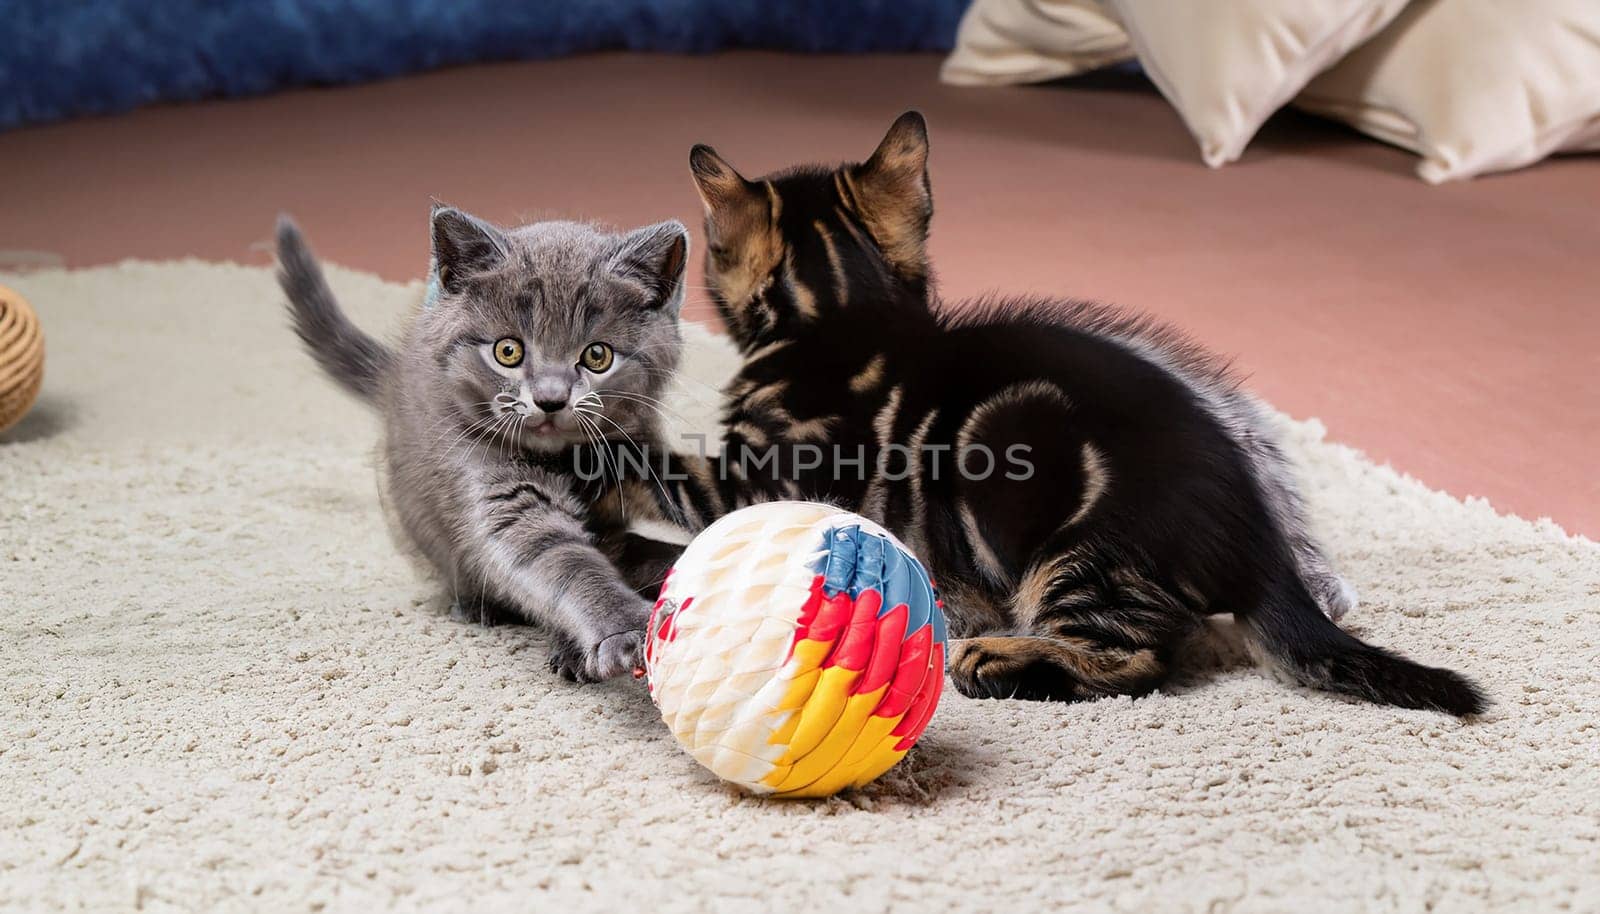 Two tabby kittens sleeping among balls of yarn